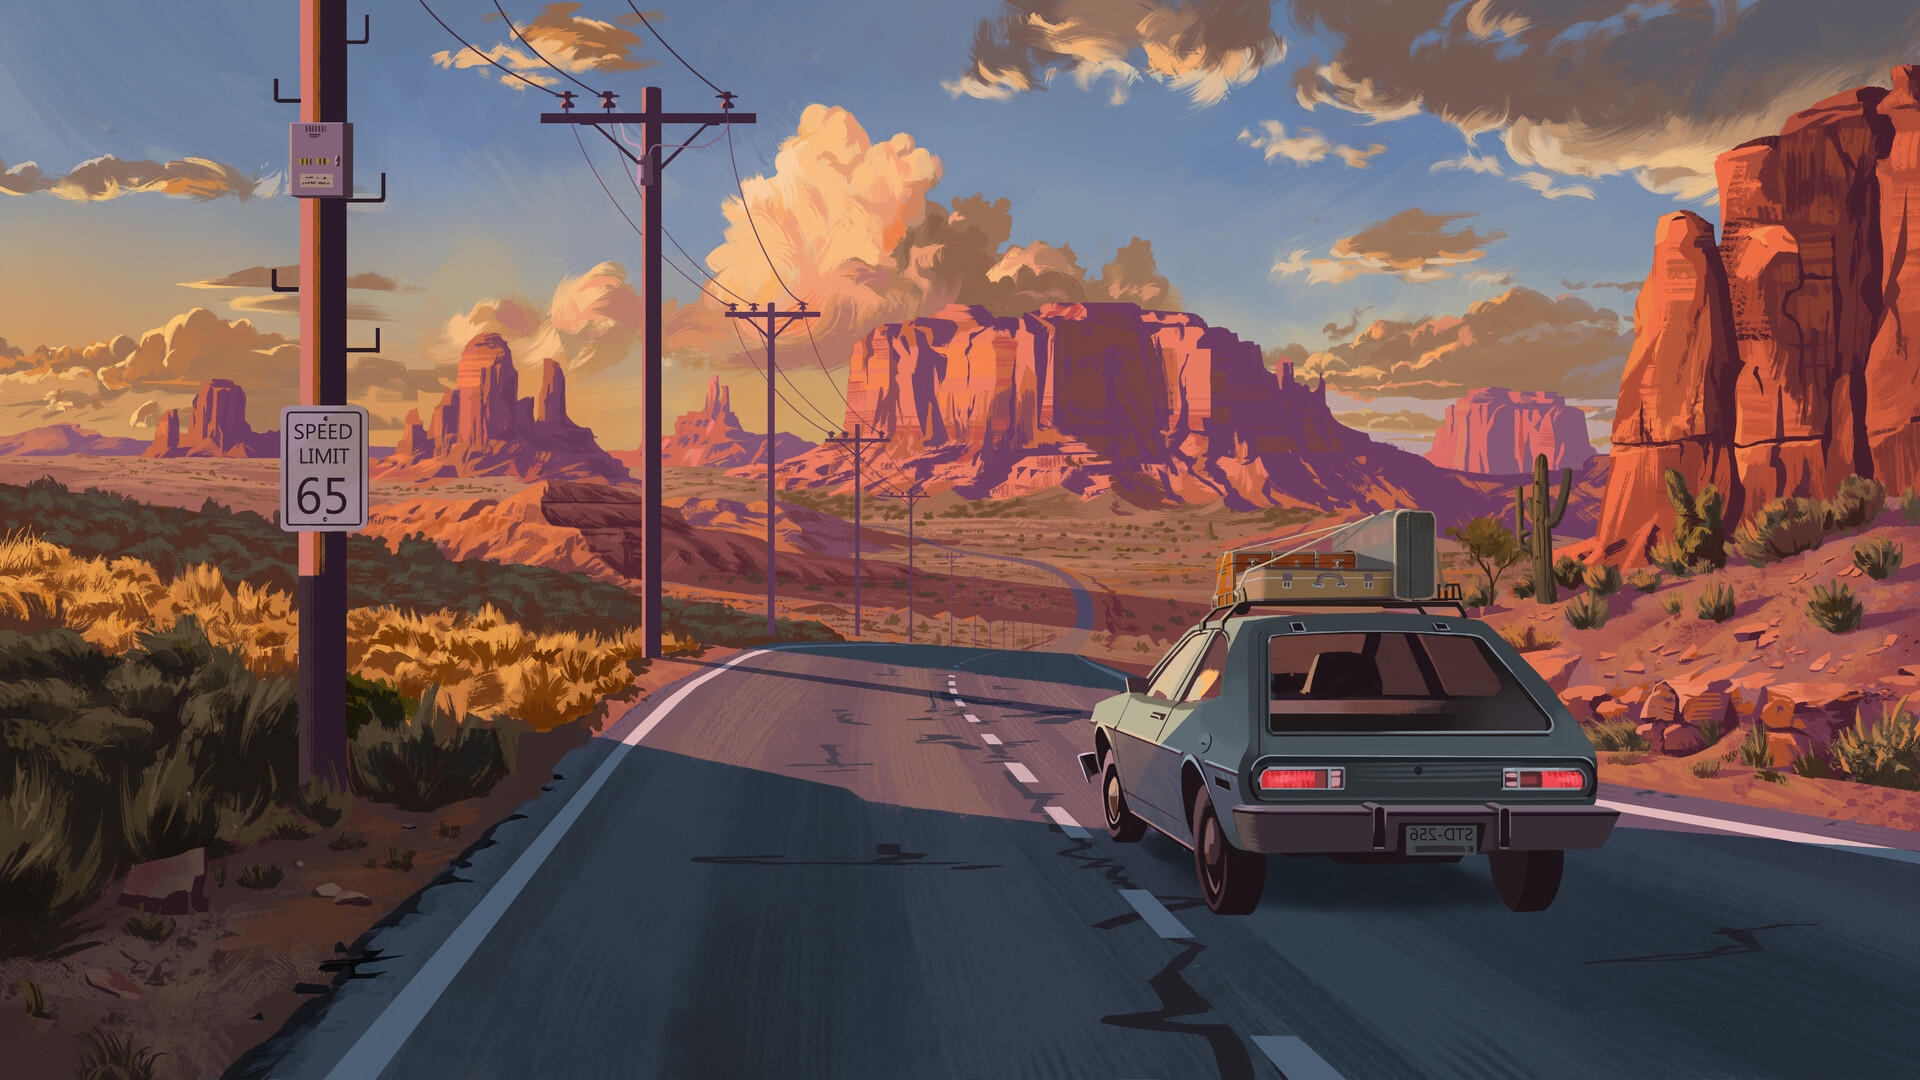 Digital Art Car Illusion Roadtrip Road Sunset Nature Peaceful Clouds Canyon Road Sign 1920x1080